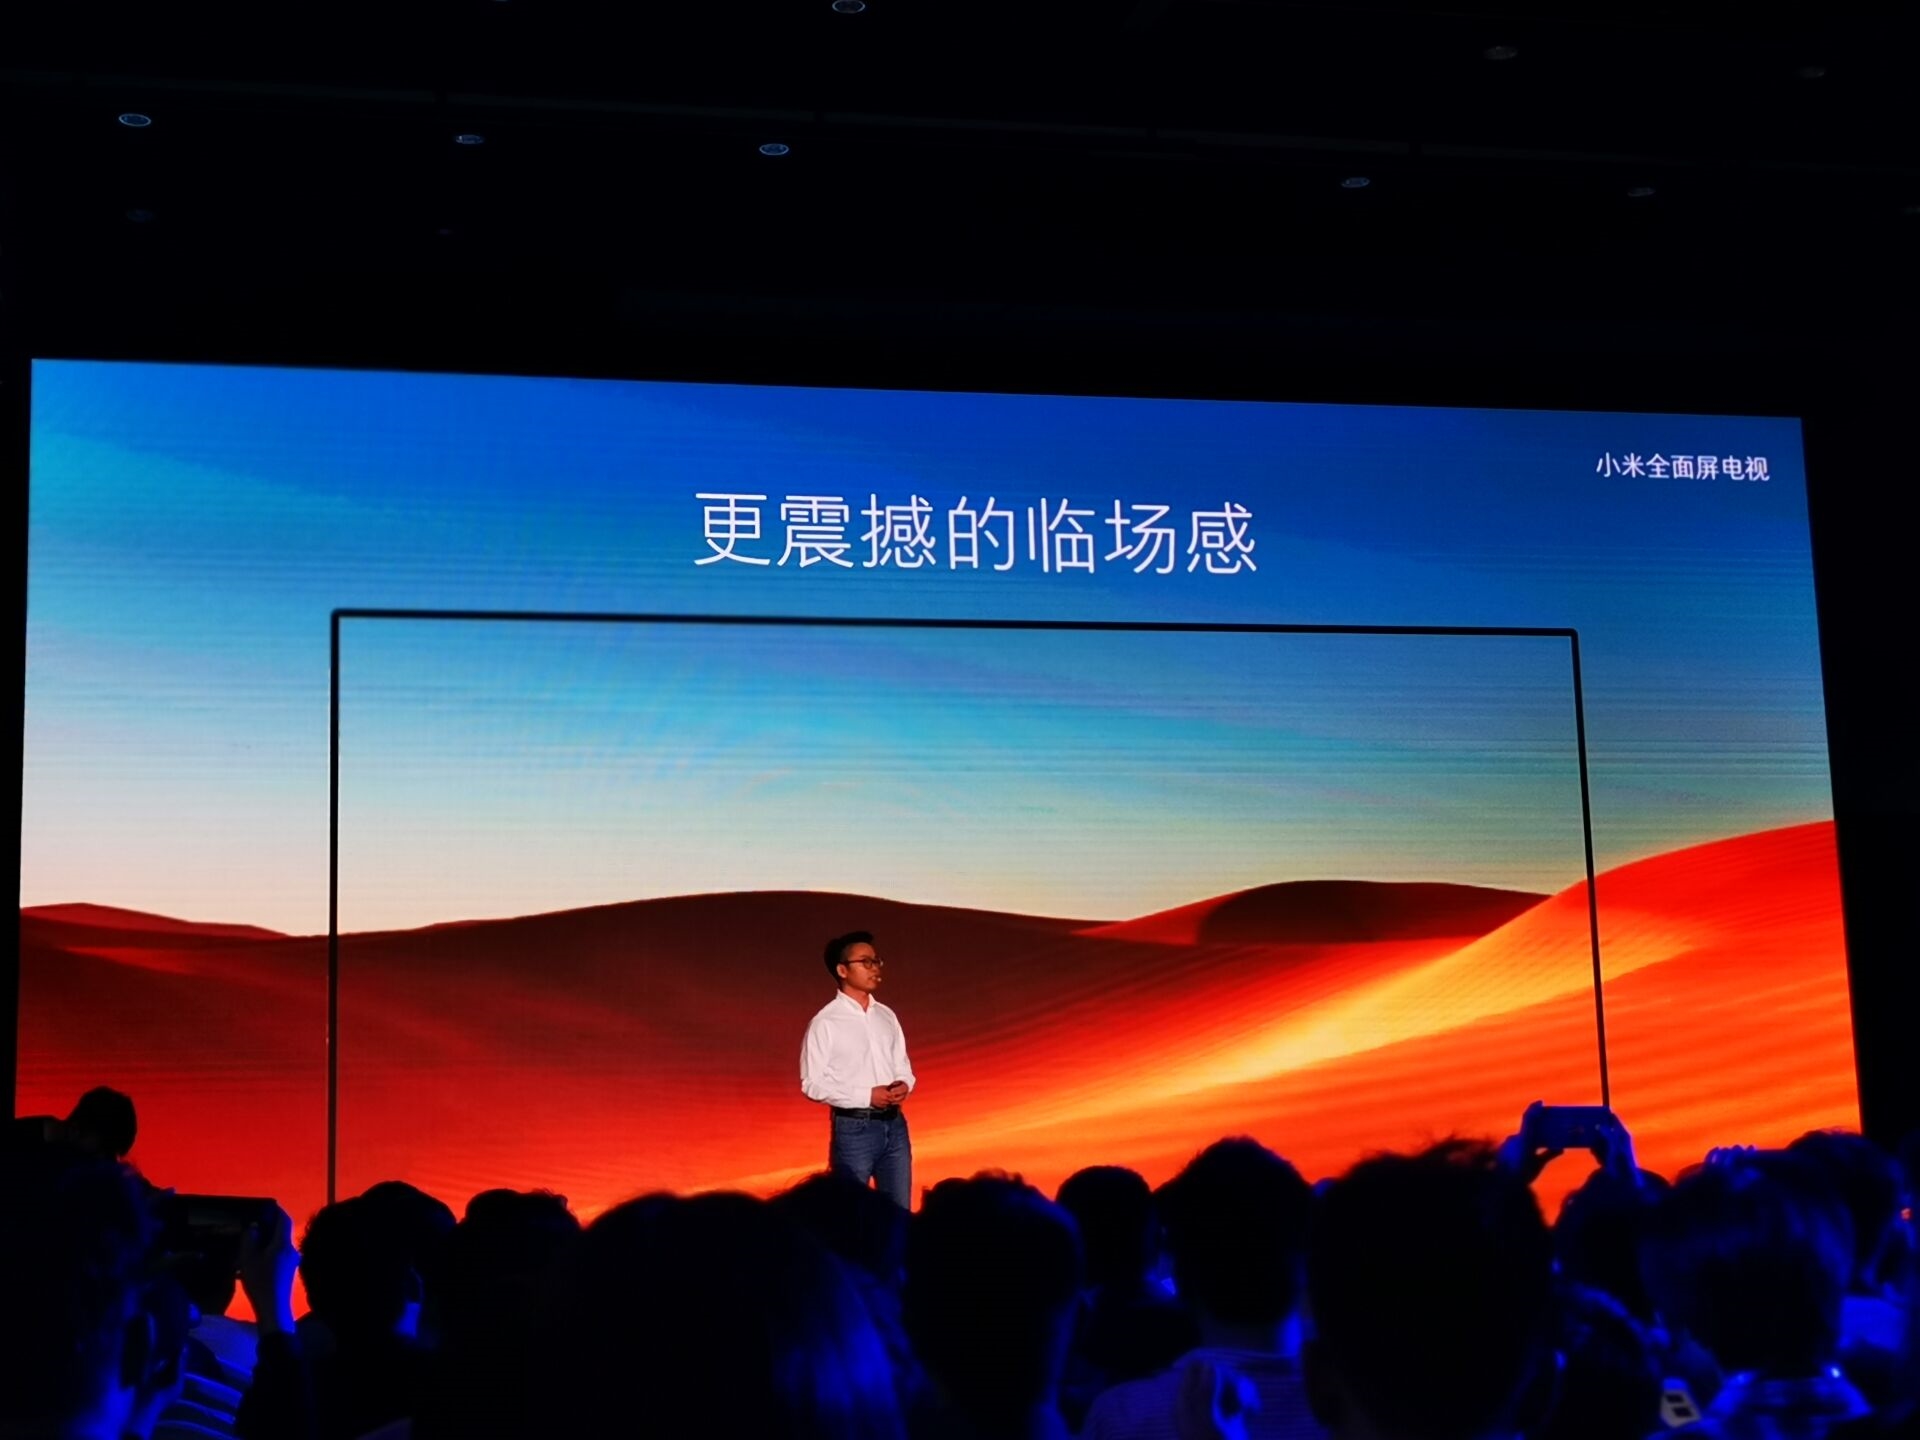 Матрица для телевизора xiaomi. Телевизор Xiaomi зеленый экран. Картинка телевизора с надписью Xiaomi.